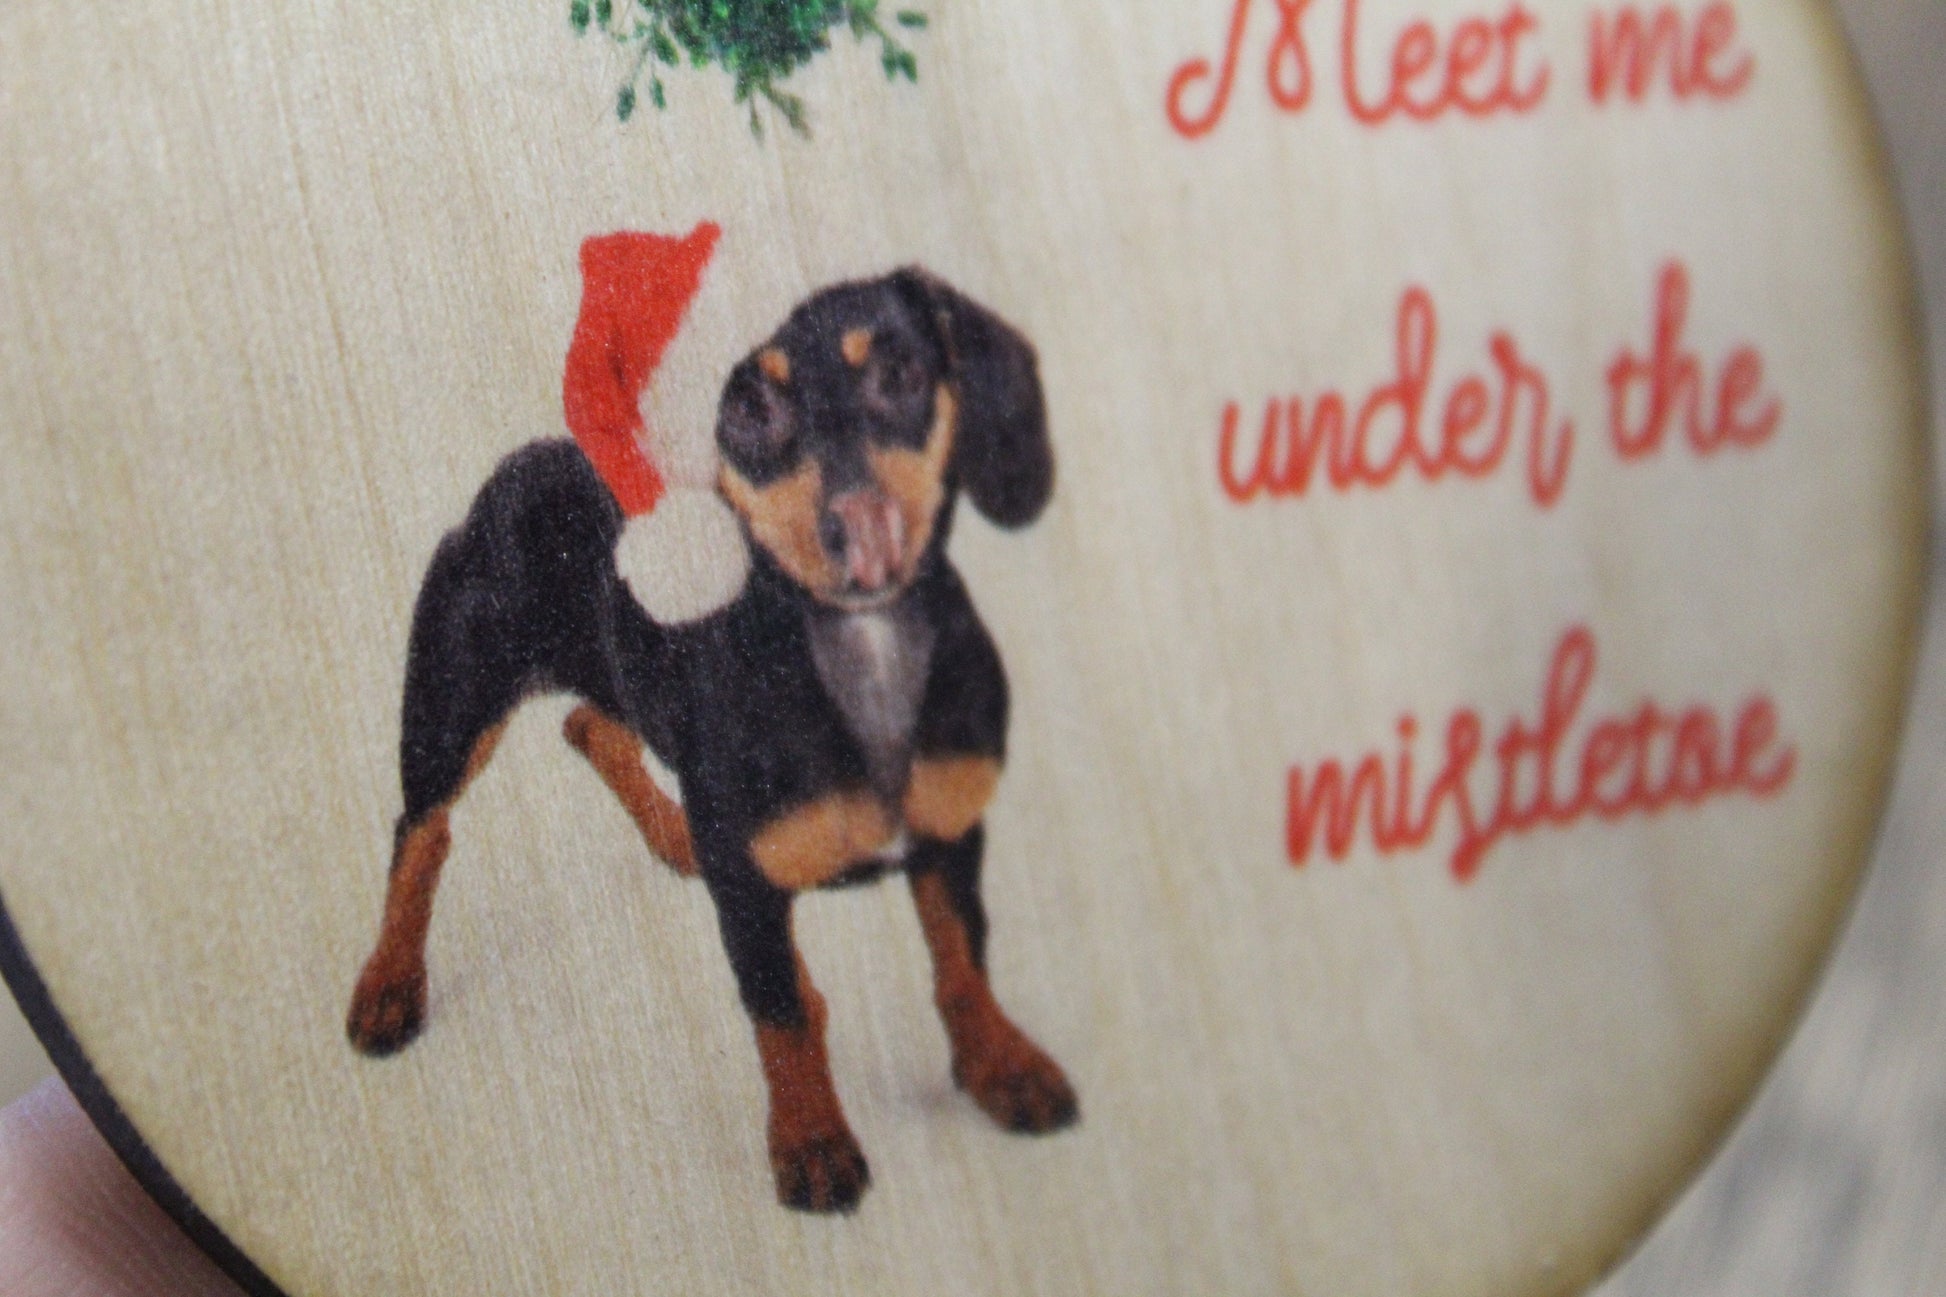 Doxie Kiss Me Under the Mistletoe Dachshund 2020 Wood Slice Dog Primitive Christmas Ornament Rustic Christmas Tree Wood Printed Tongue